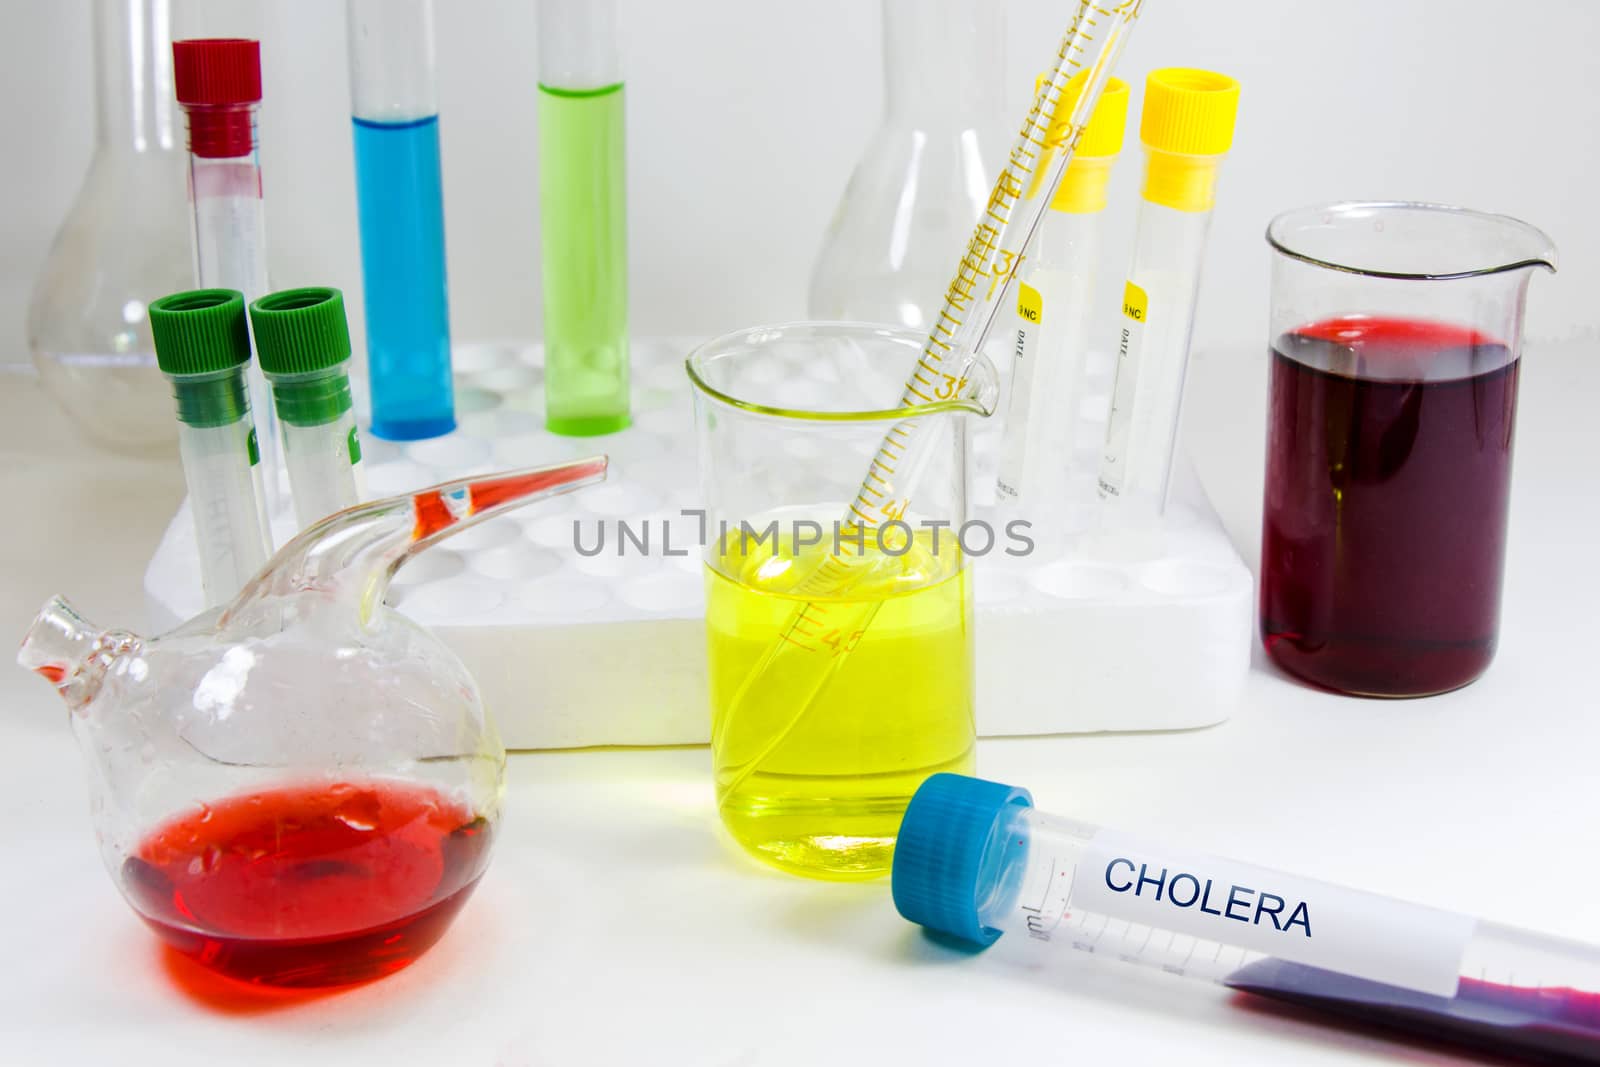 Cholera lab test, blood tube sample on the white background